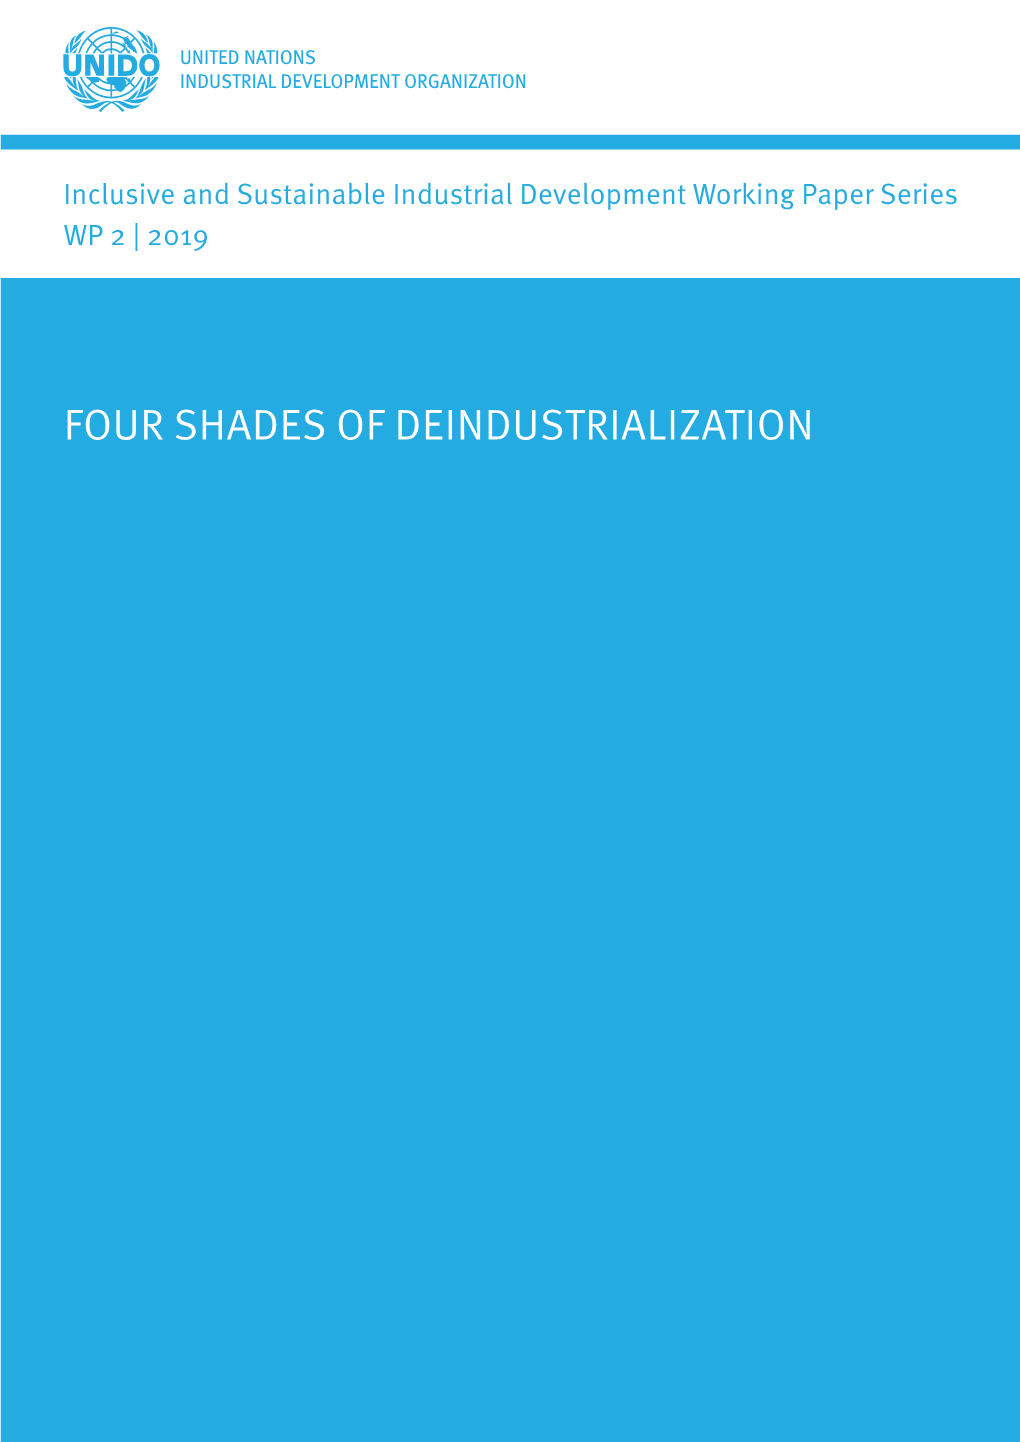 Four Shades of Deindustrialization